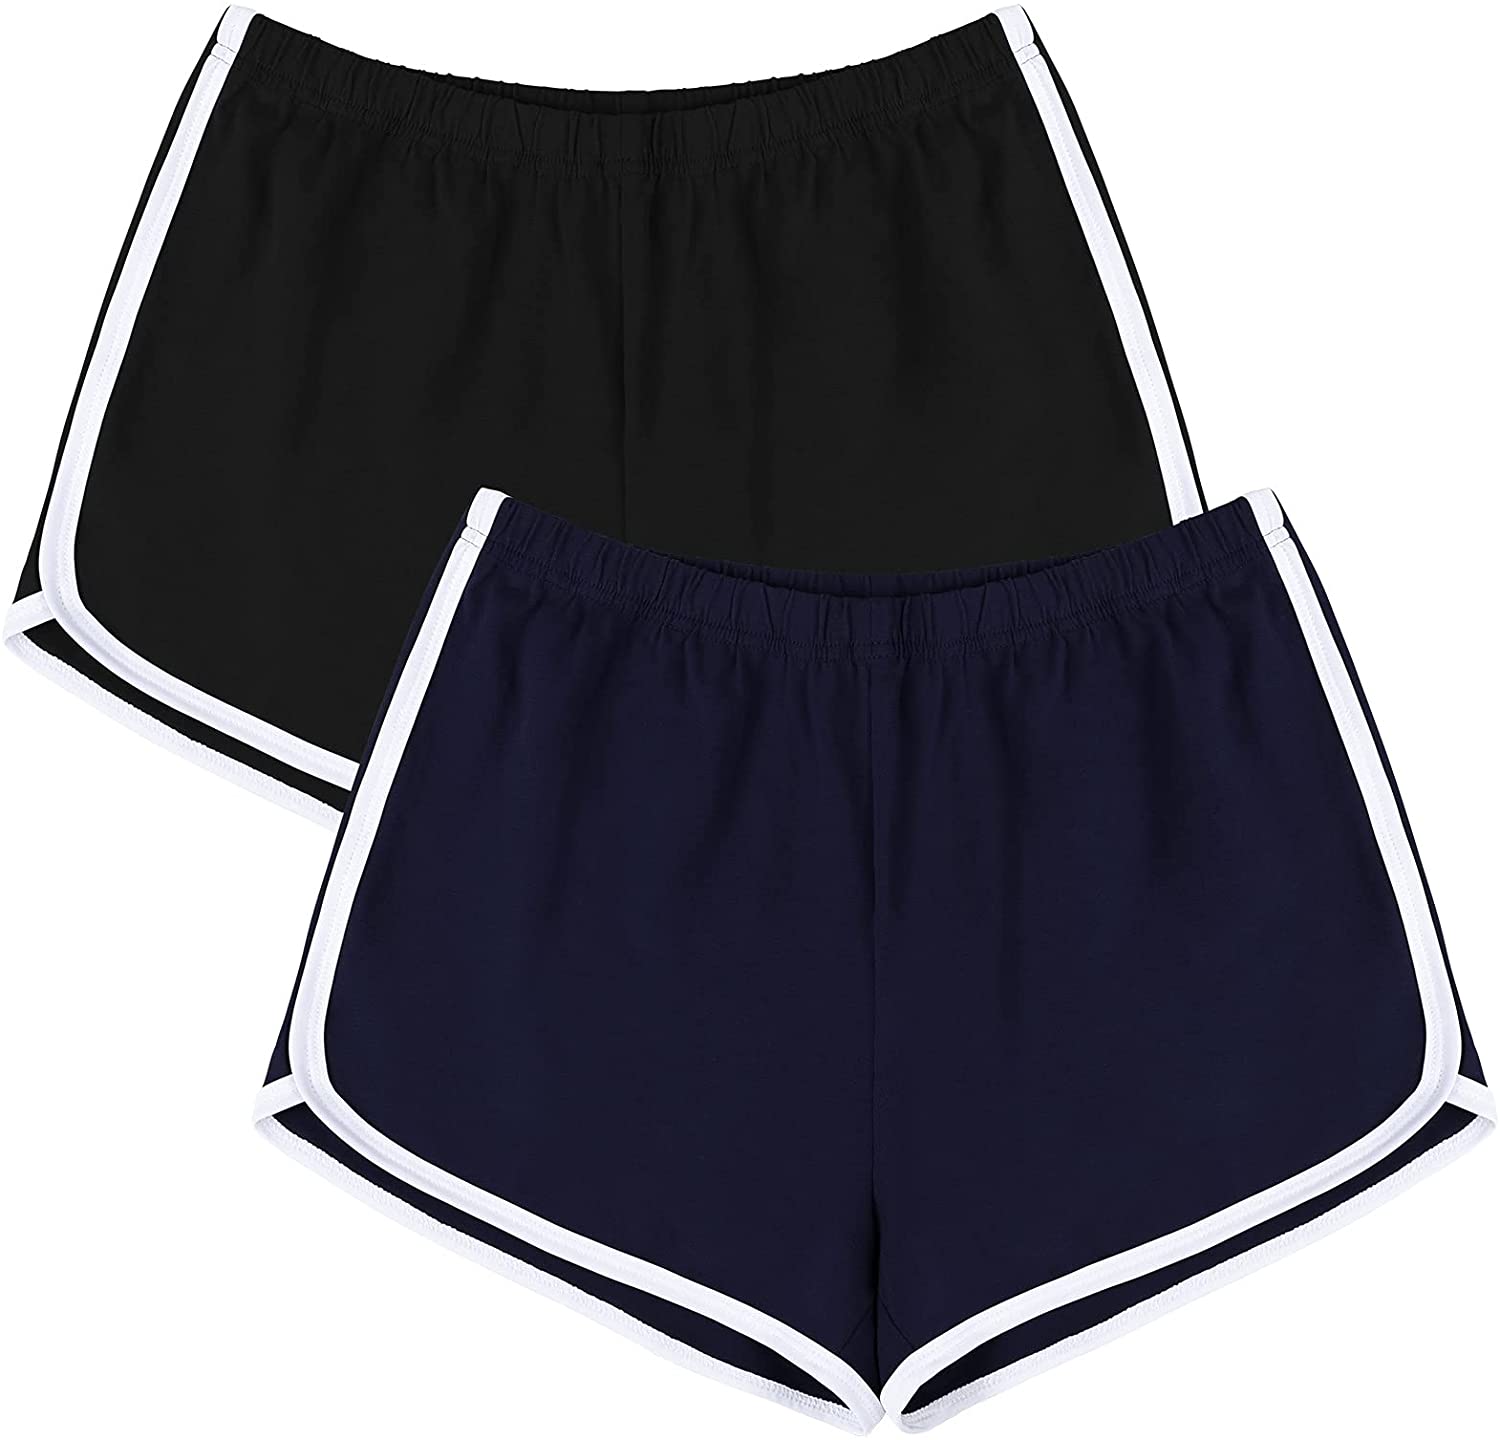 Sport Shorts Yoga Dance Short Pants Summer Athletic Shorts 2 Pack